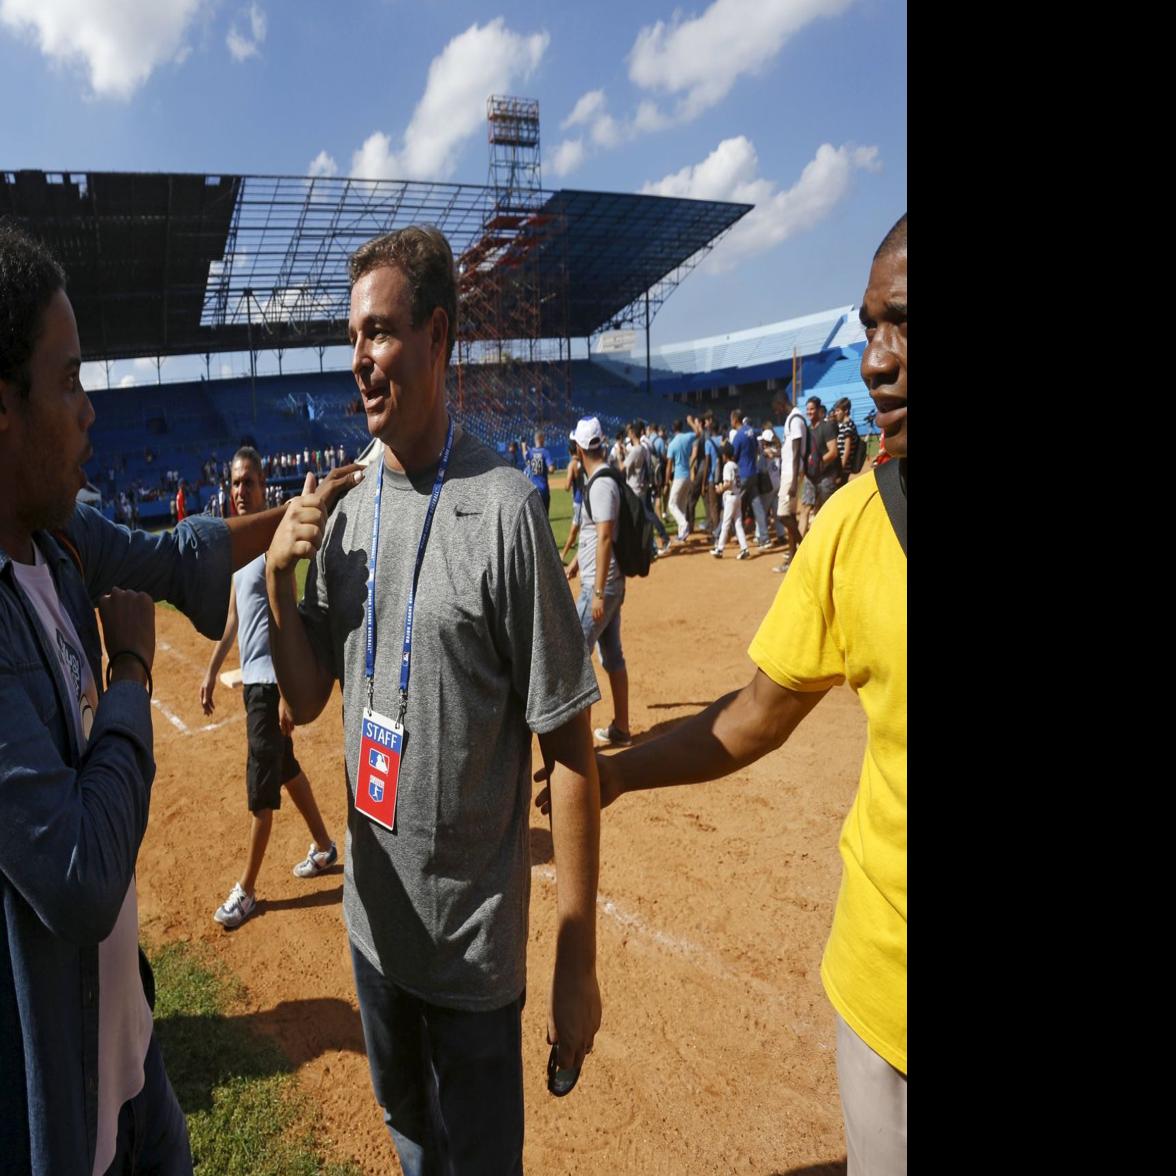 MLB: Top Cuban seeks big league dreams in US